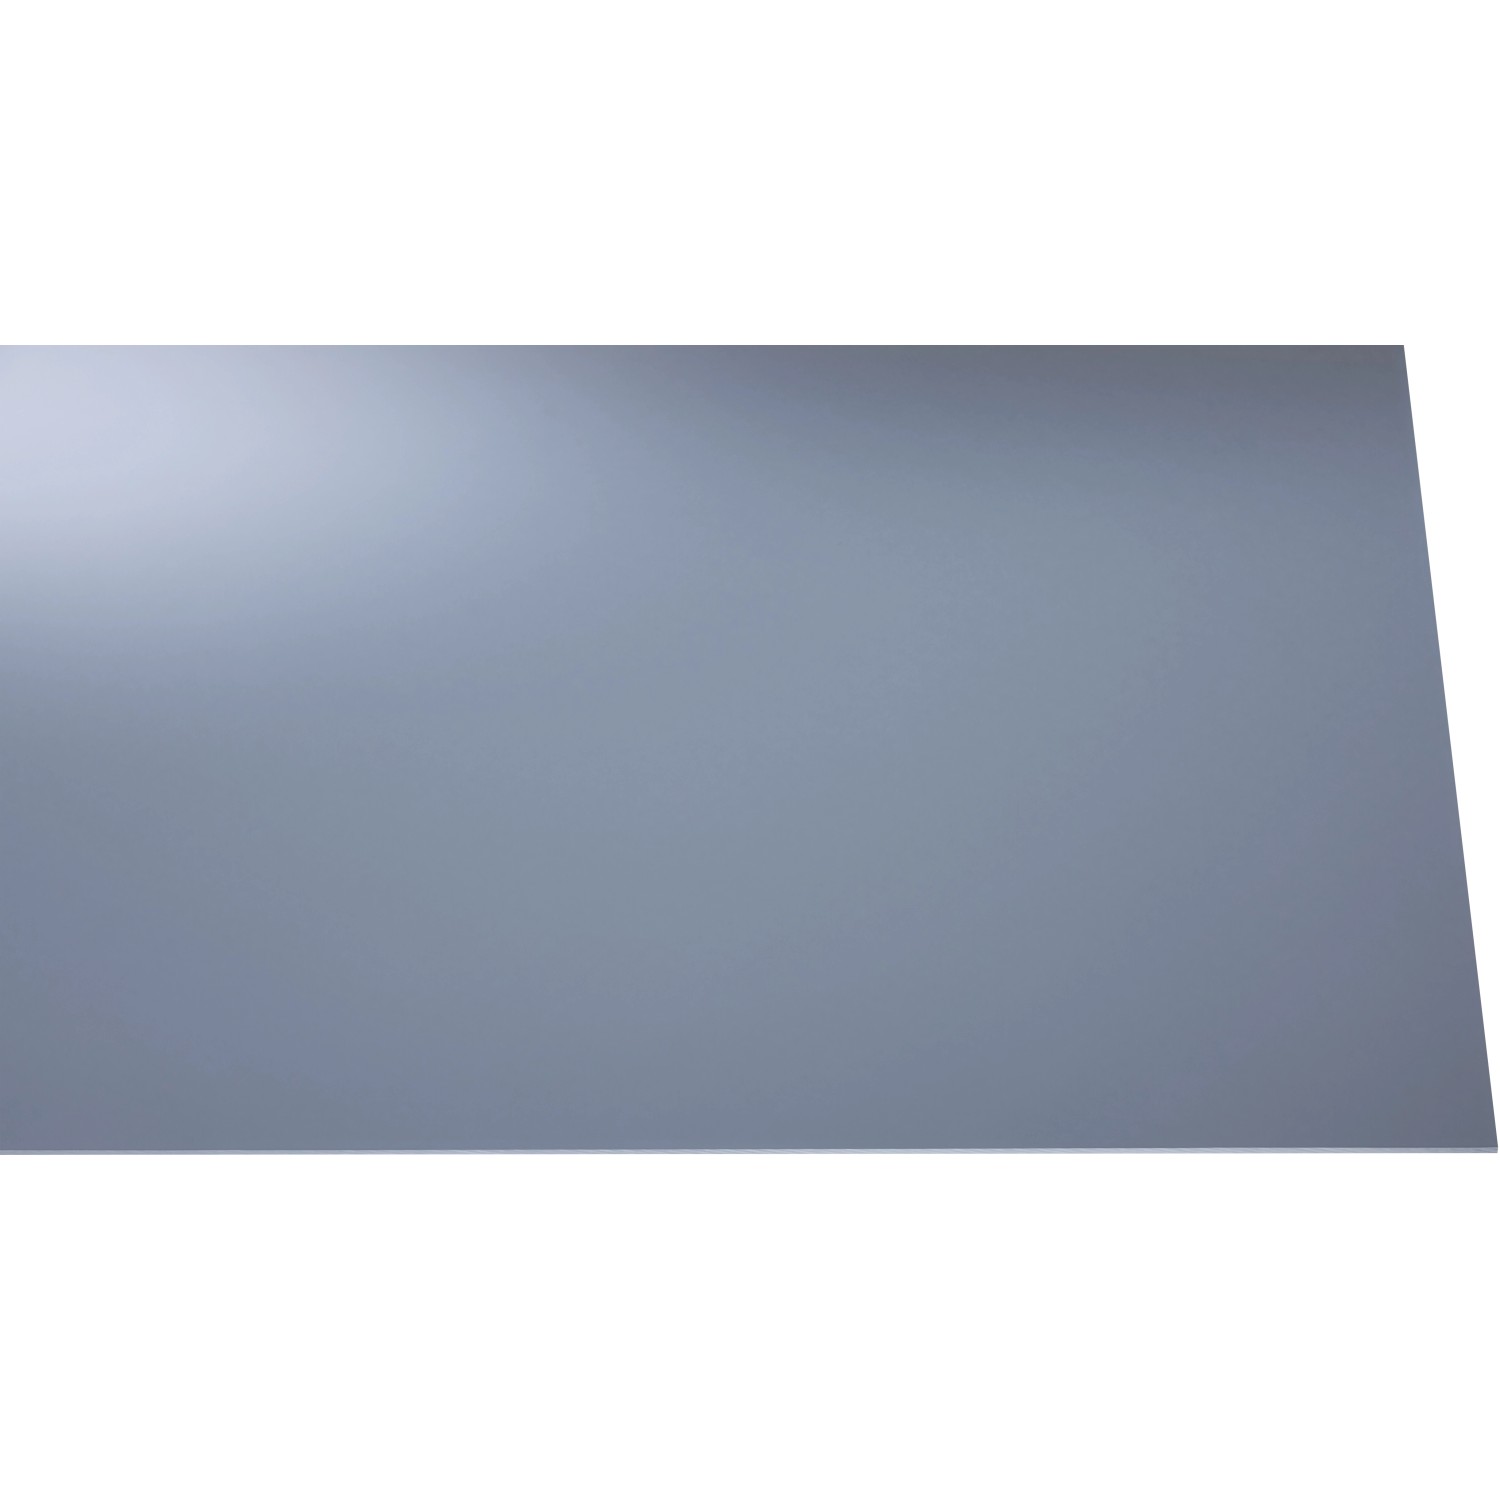 Acryl Platte Eben 3 mm Glatt Grau 250 mm x 500 mm kaufen bei OBI